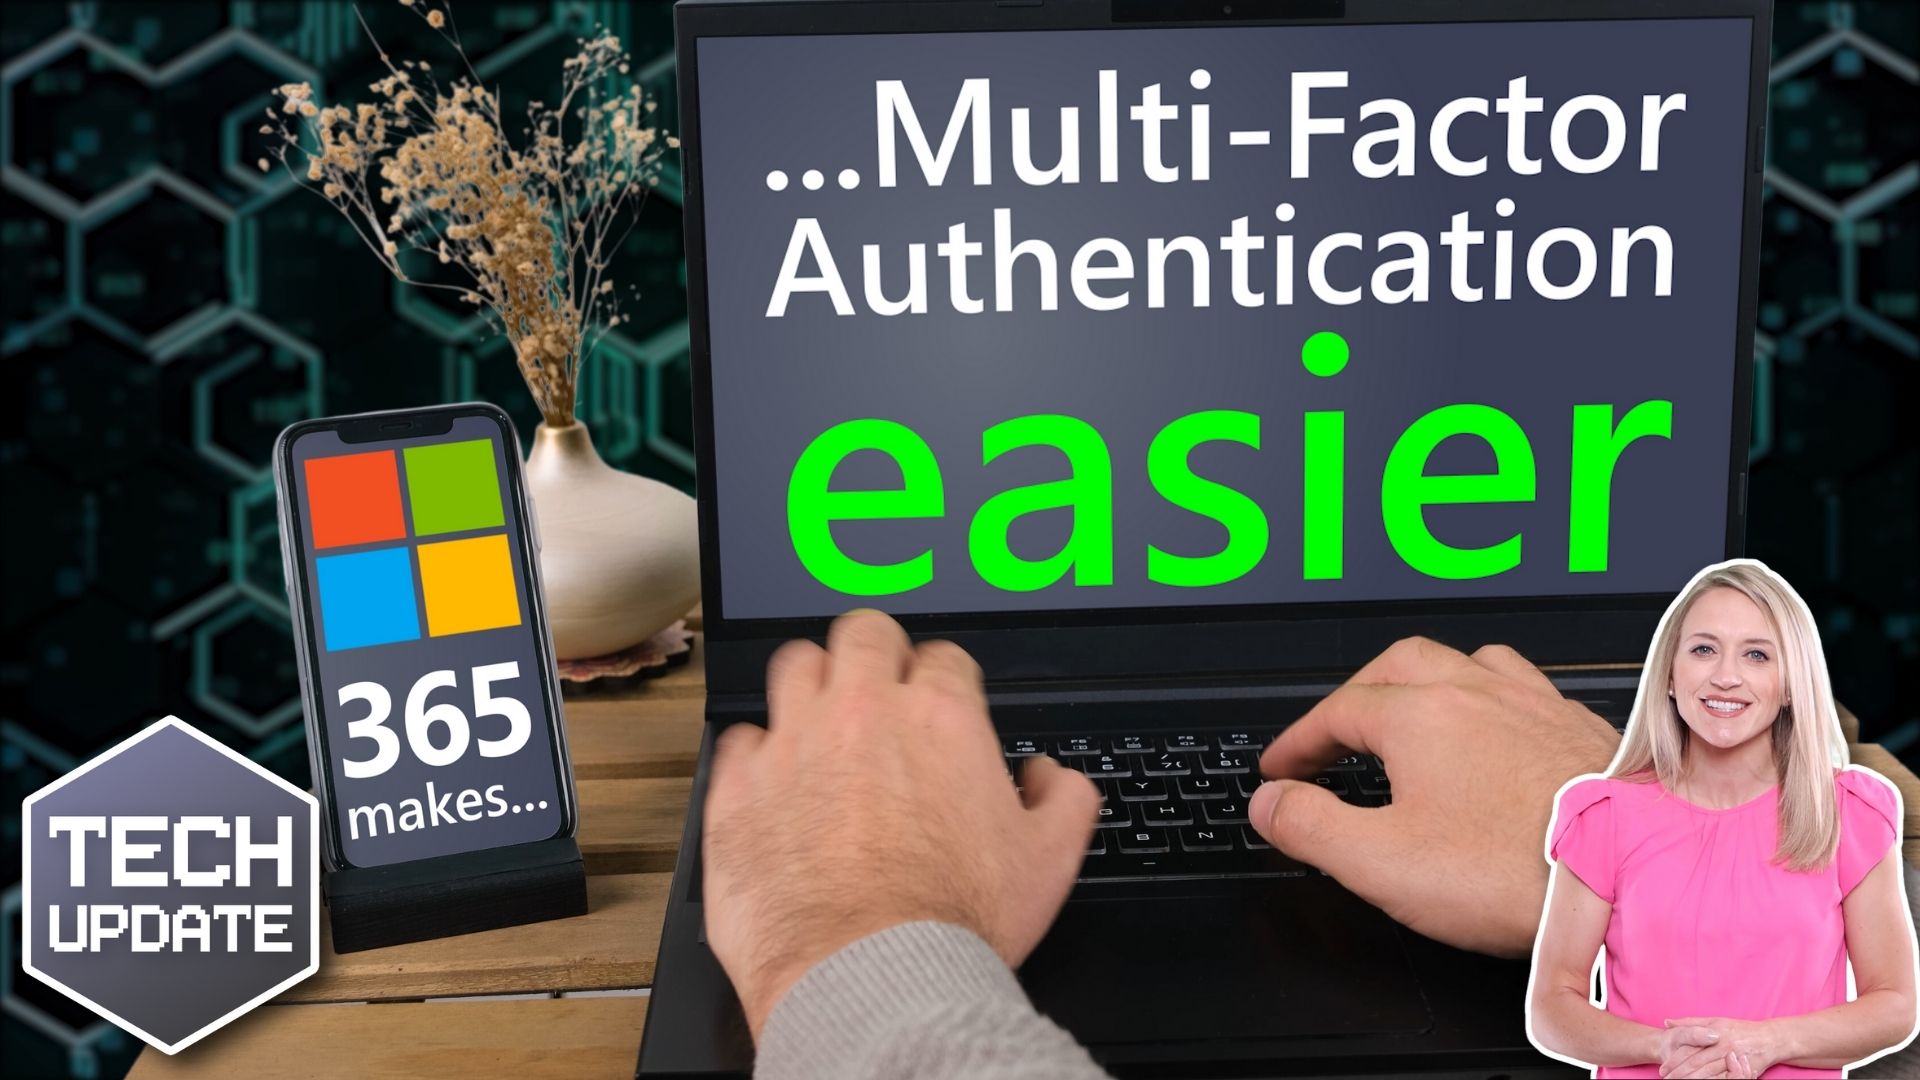 Microsoft 365 makes Multi-Factor Authentication easier